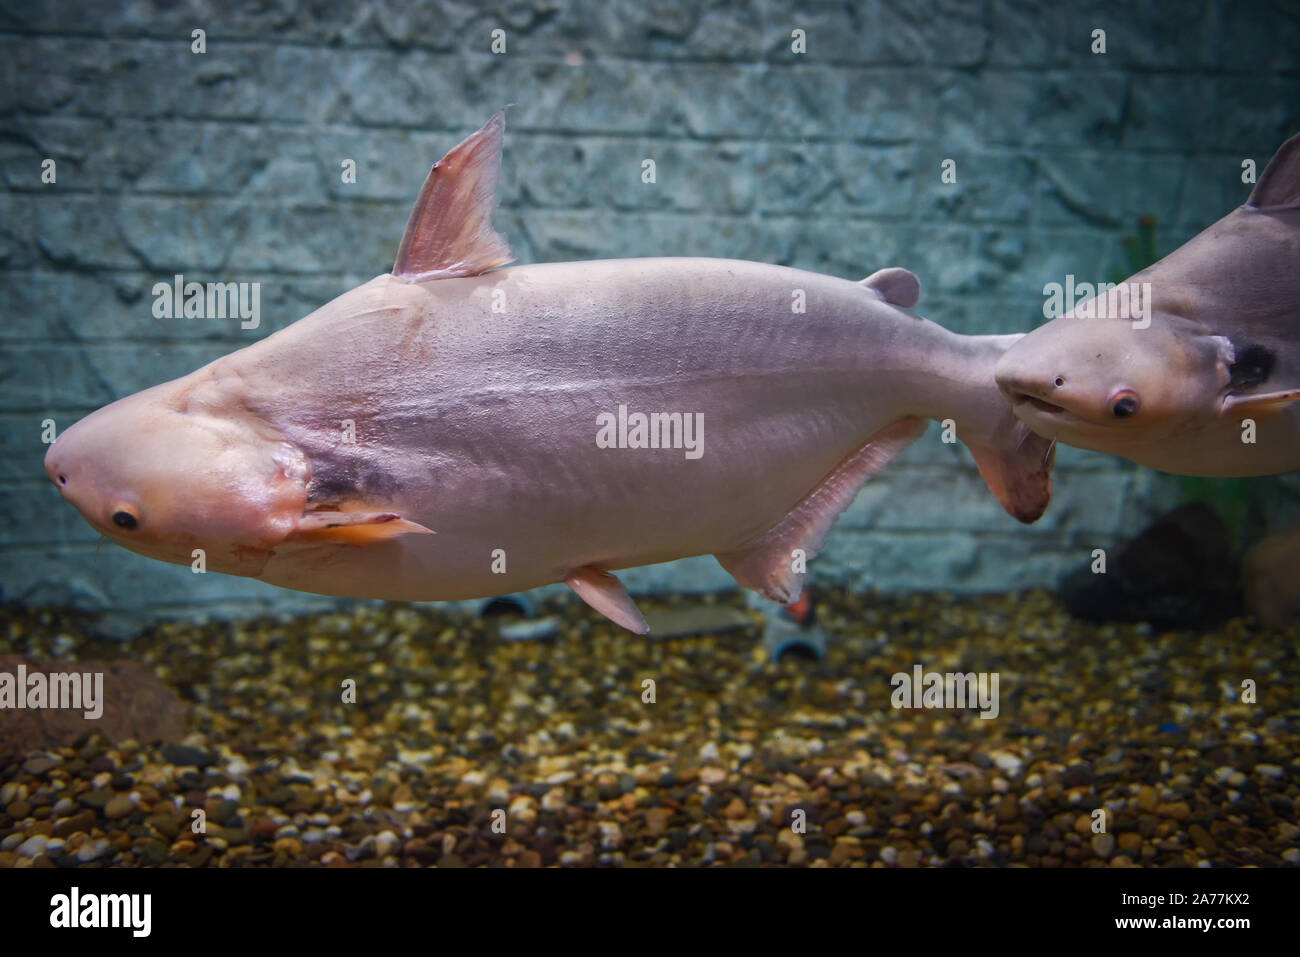 Black ear catfish or Pangasiidae fish swimming underwater fish tank at aquarium / Pangasius larnaudii Stock Photo